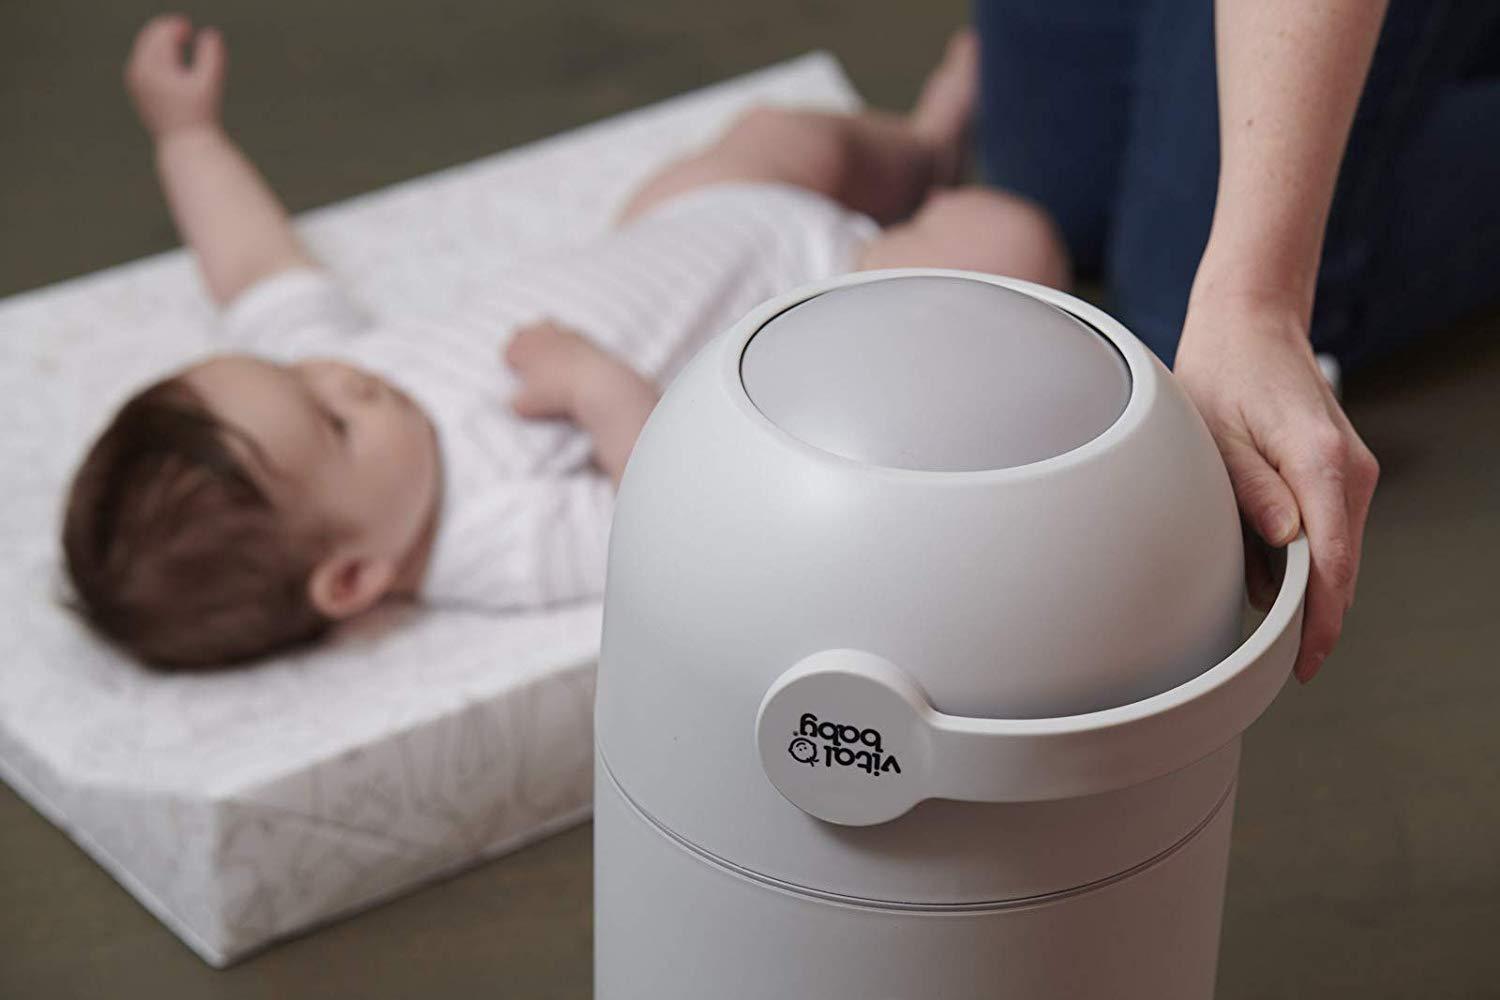 Vital Baby HYGIENE - Lixeira com sistema anti odor Anne Claire Baby Store 